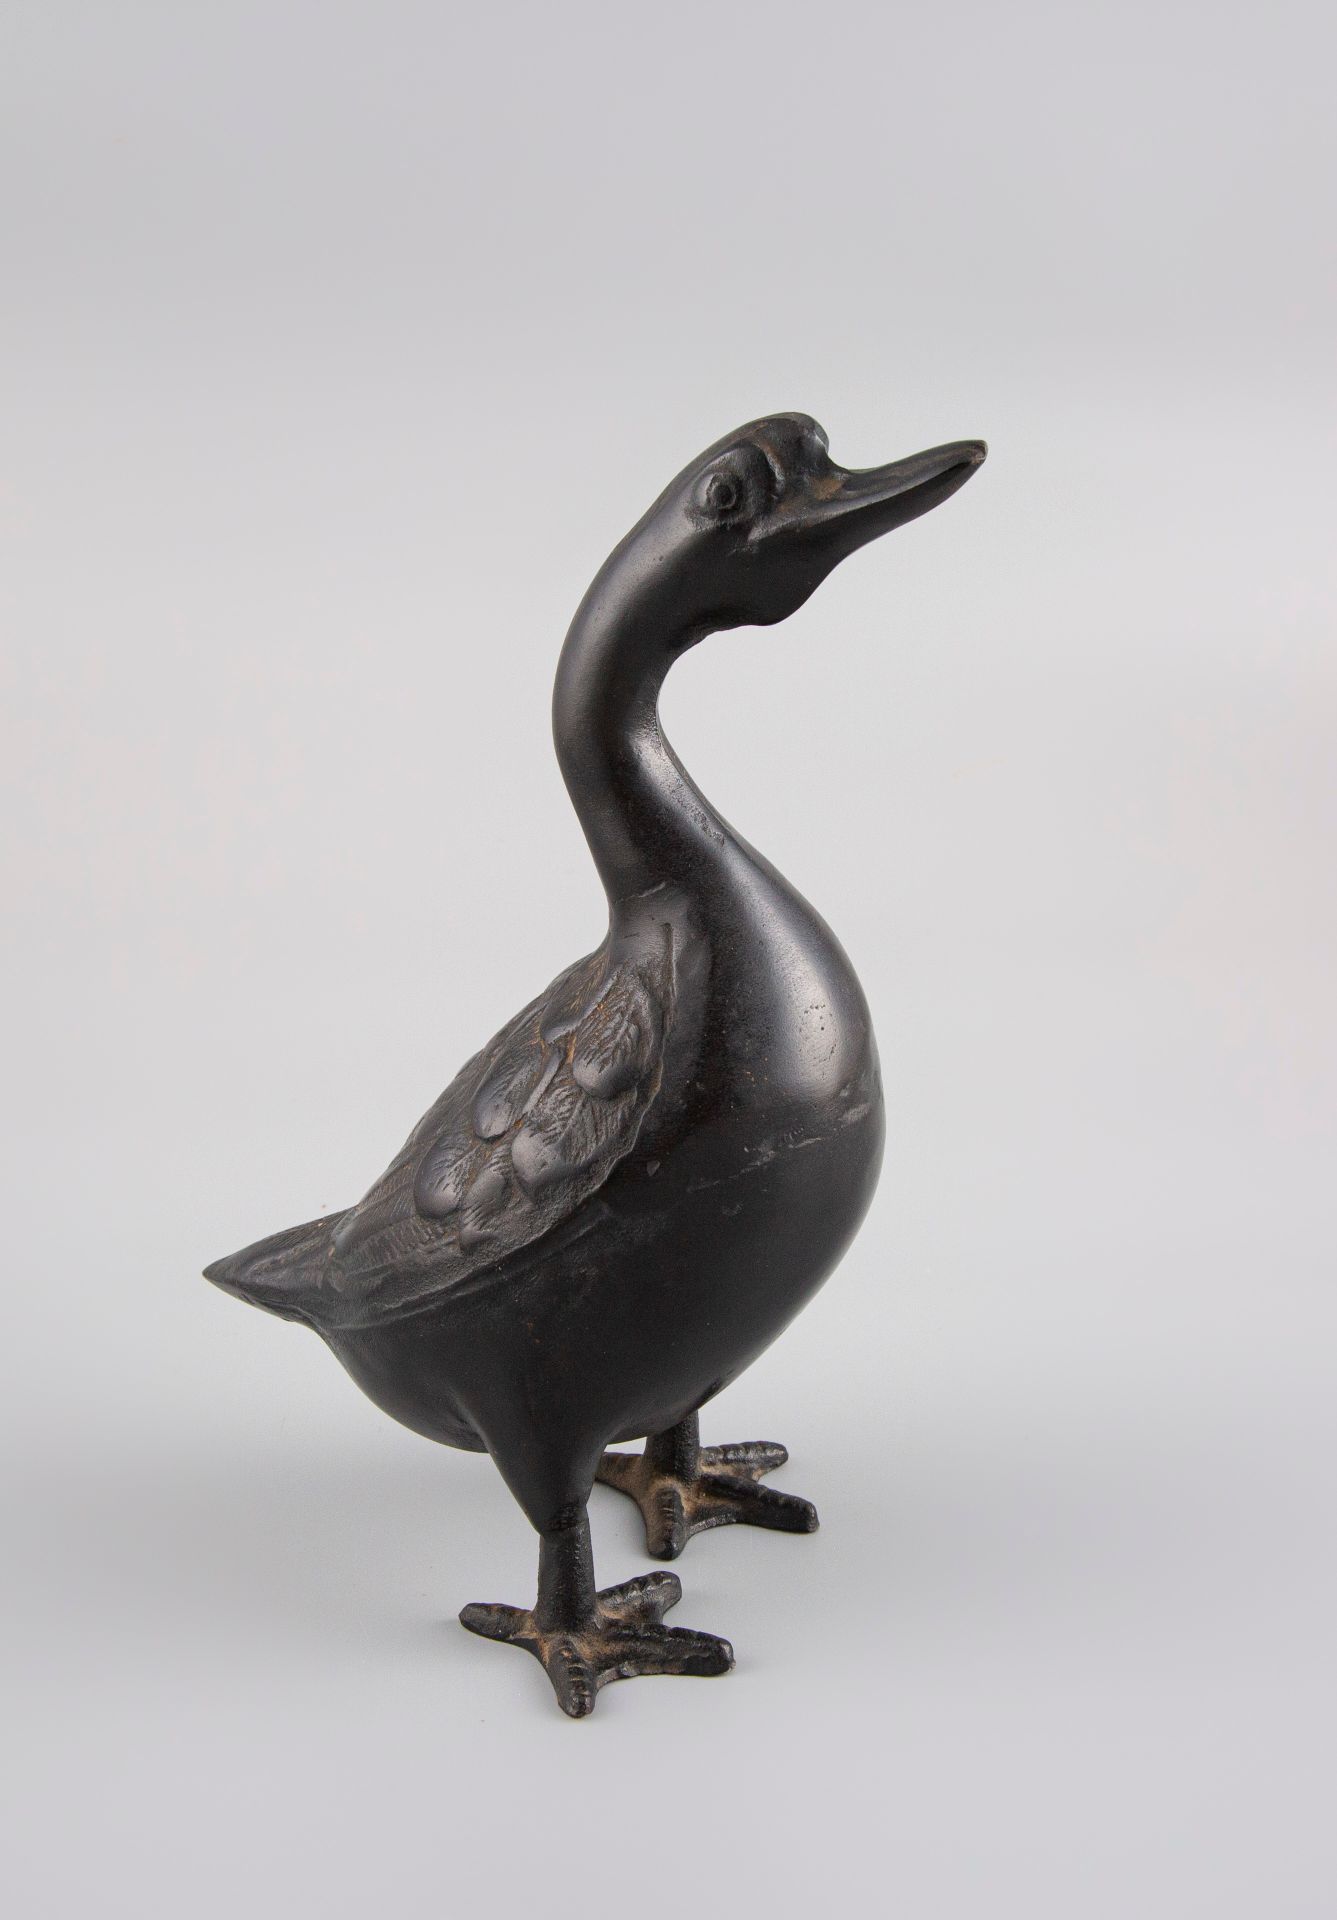 Null Objeto de bronce que representa un pato. Altura 26 cm.